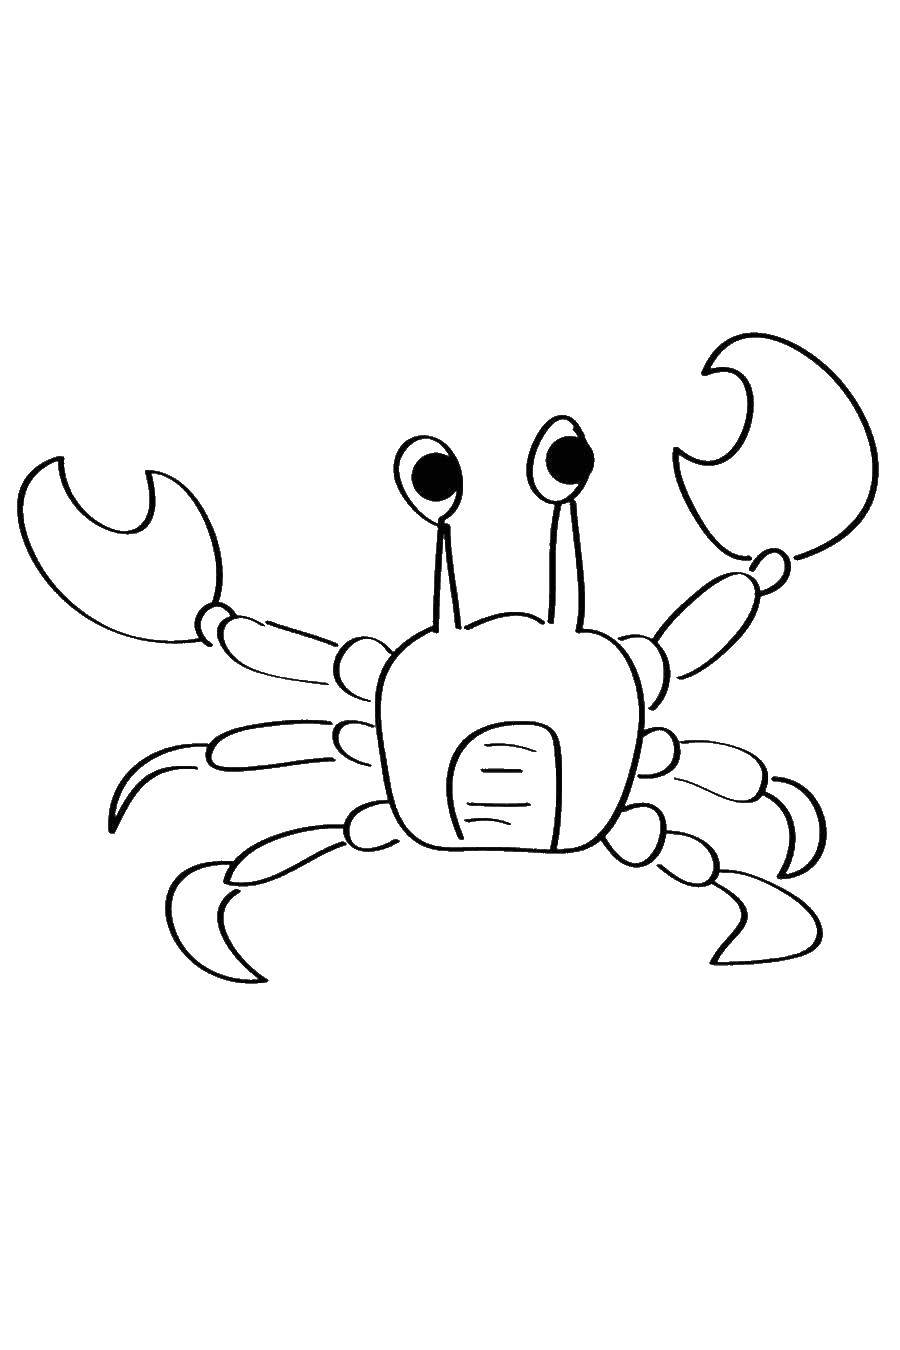 Coloring Crab. Category marine animals. Tags:  crab.